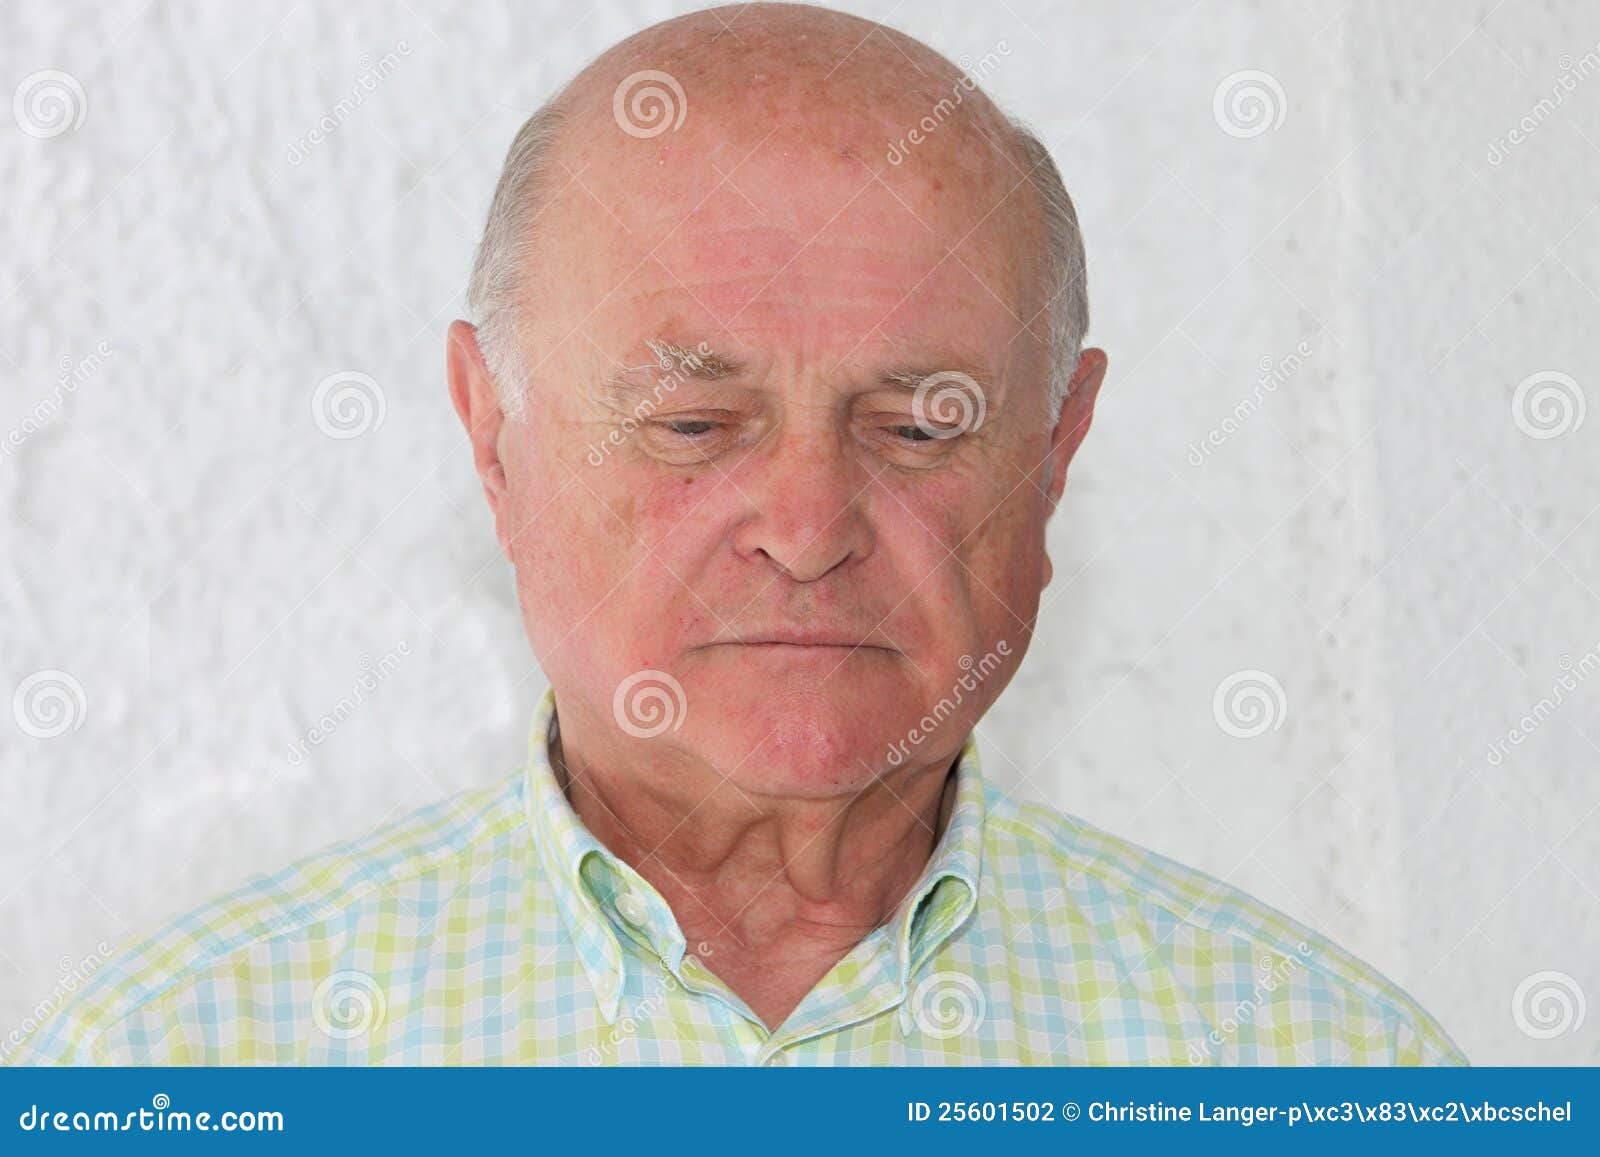 Sad Lonely Elderly Man Stock Photography - Image: 25601502